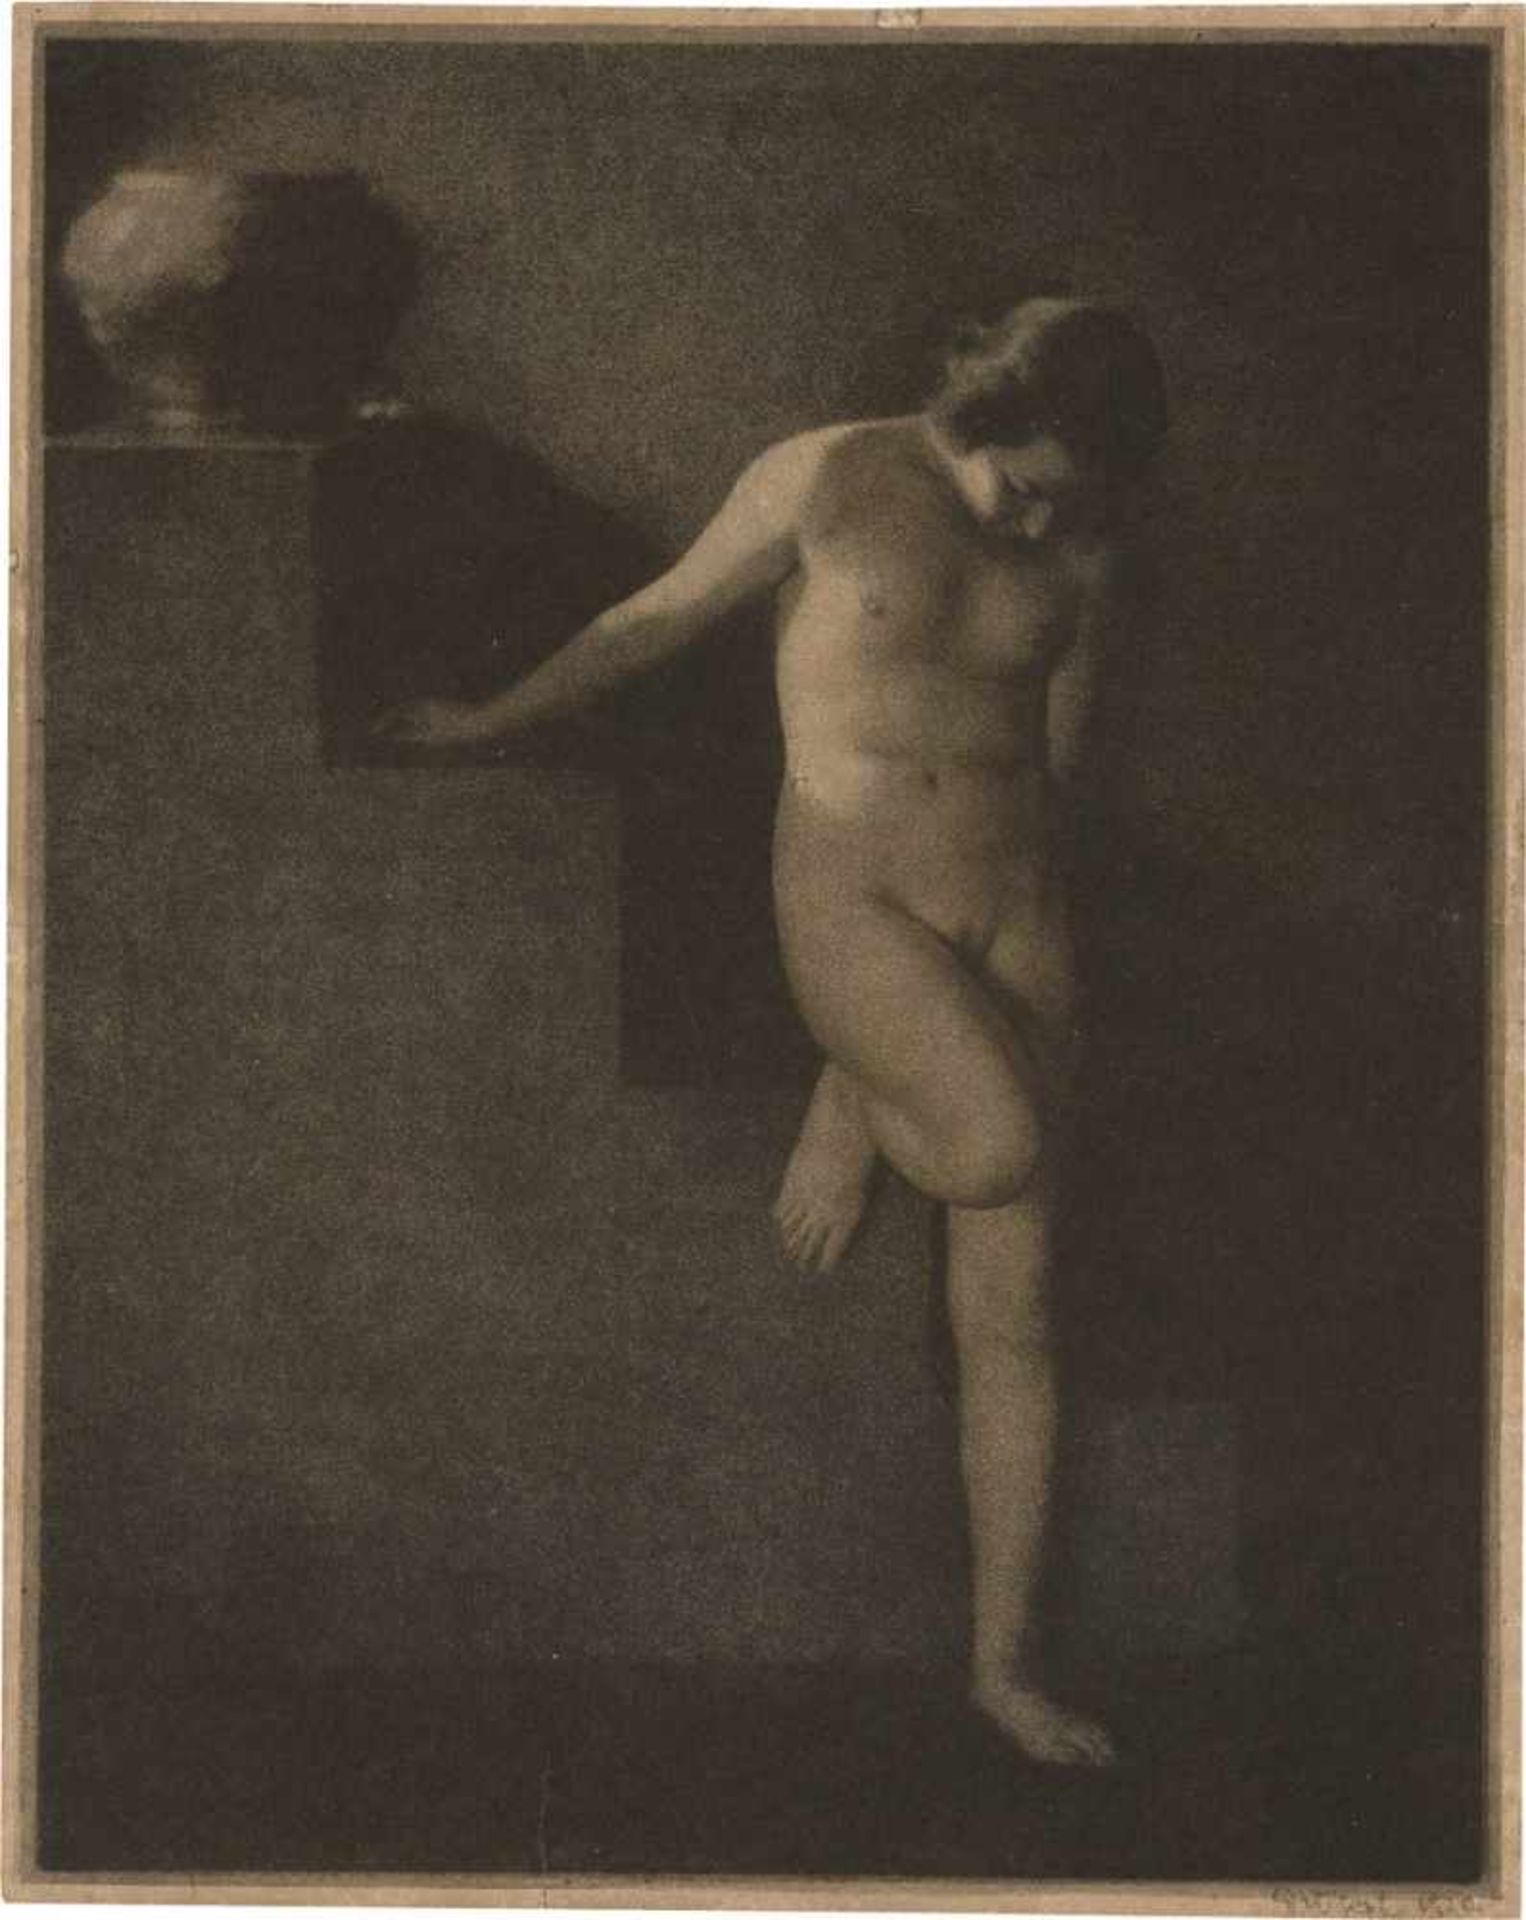 Drtikol, Frantisek: Nude study Nude study. 1920. Vintage green-toned bromoil print on Imperial